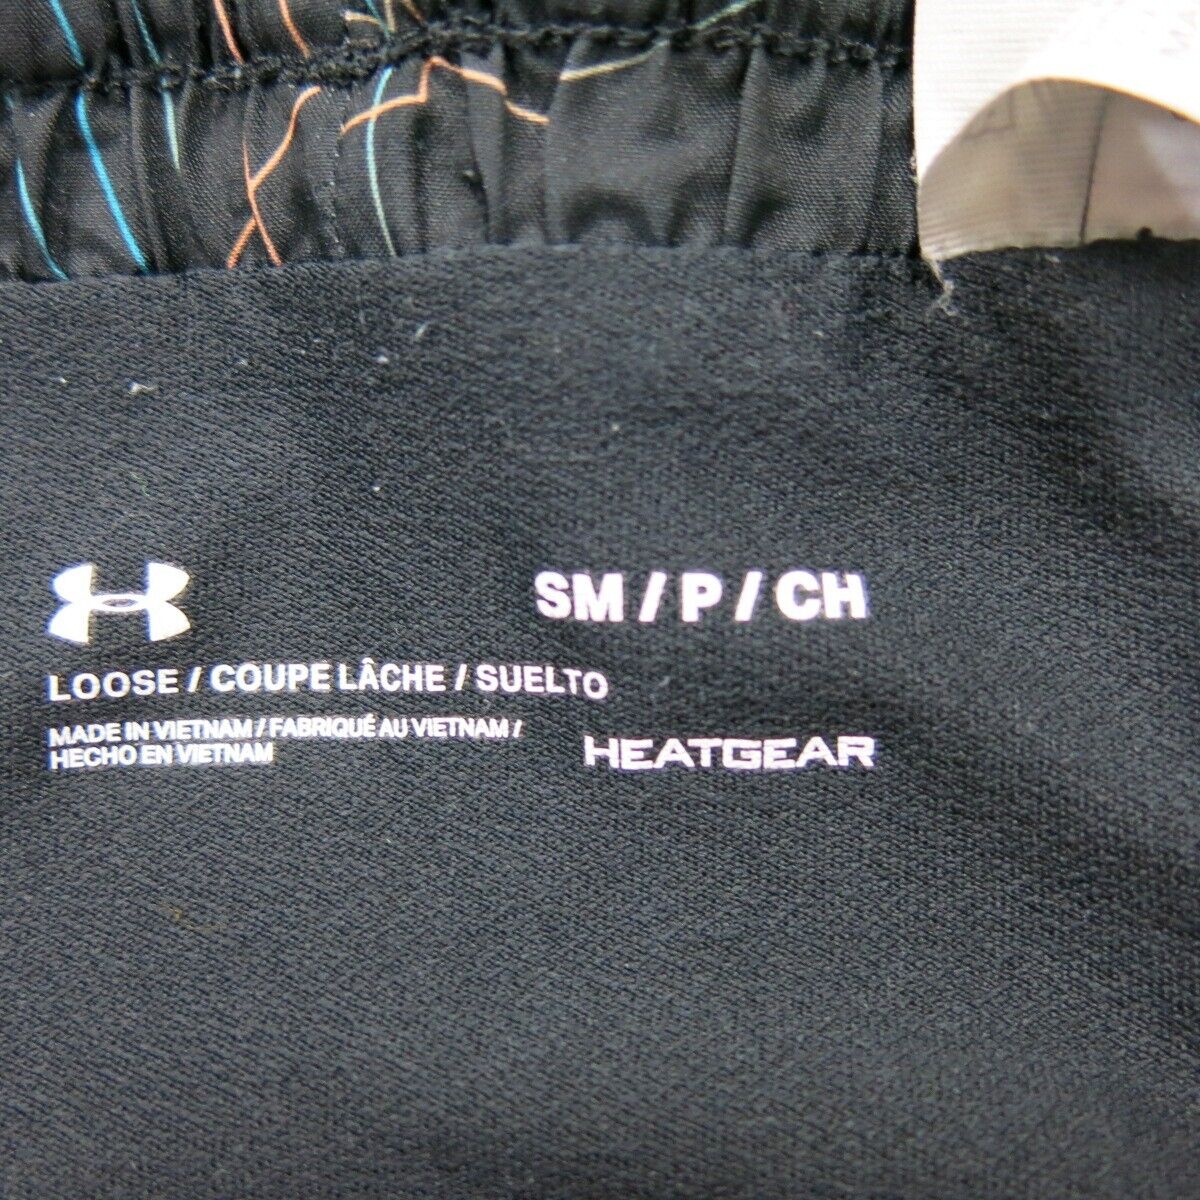 Under Armour Womens Athletic Shorts Loose Fit Elastic Waist Heatgear Black SM/P